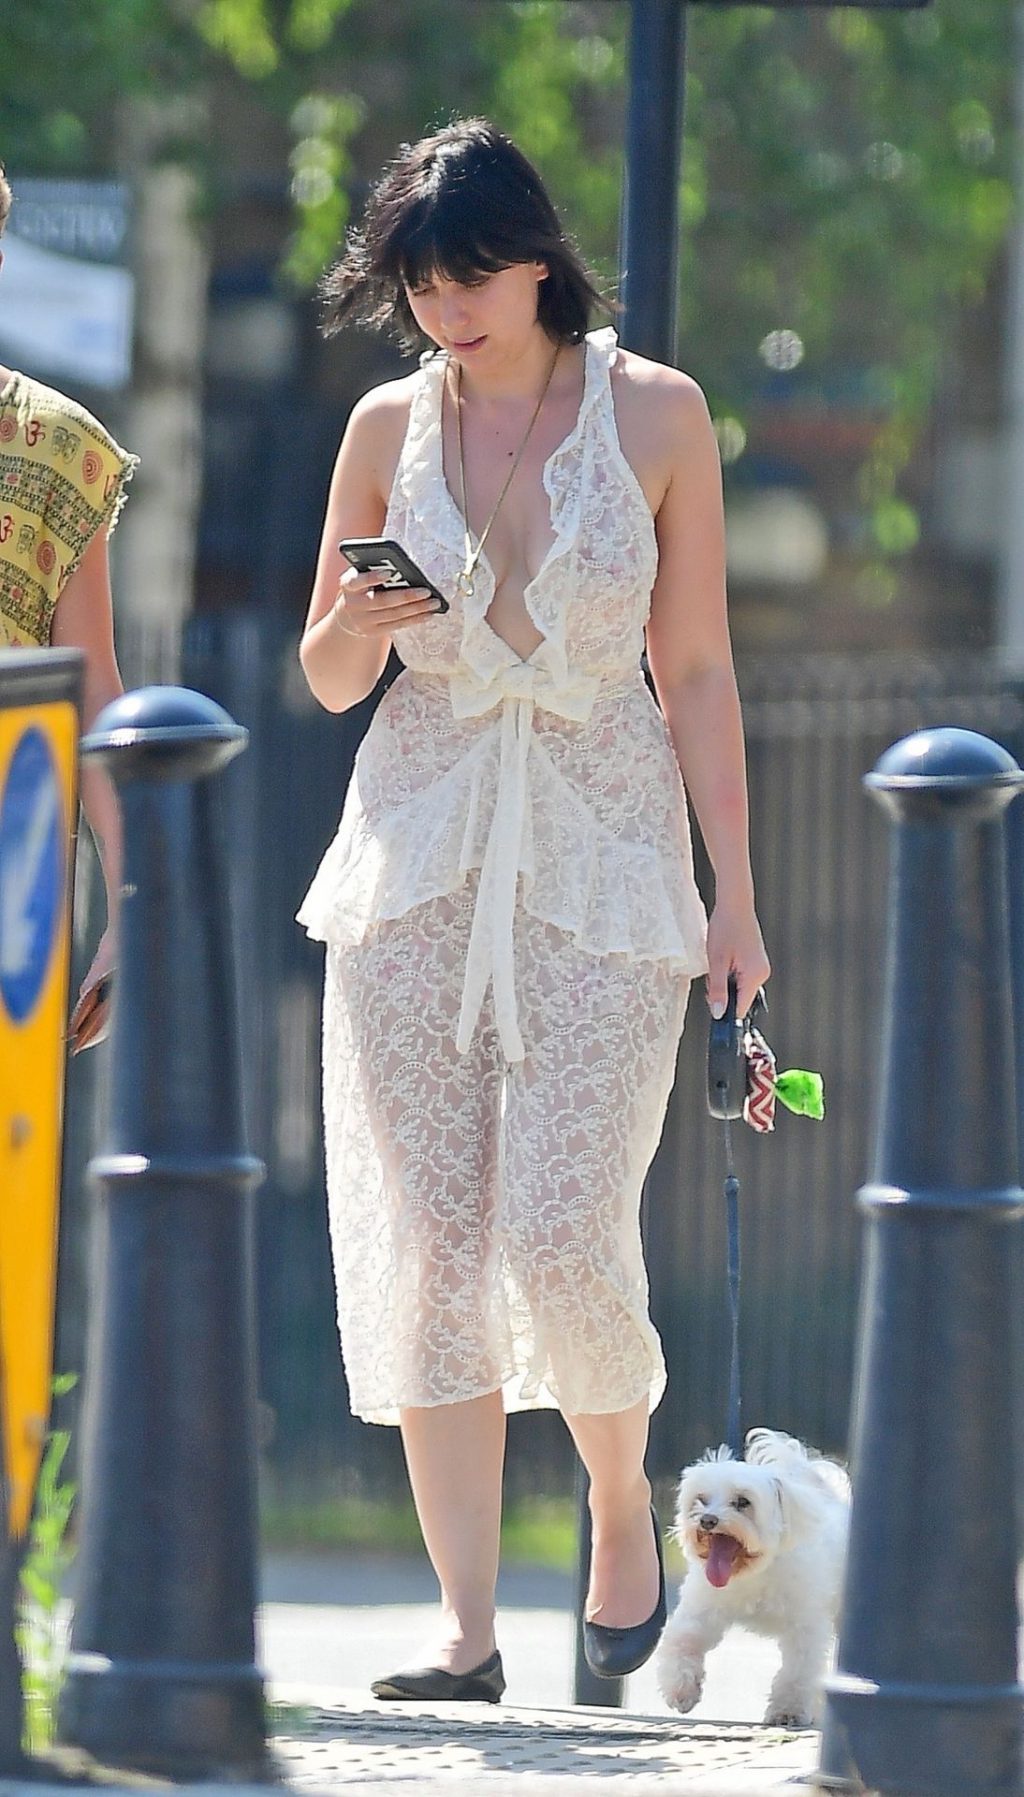 Daisy Lowe in a summery dress out in London